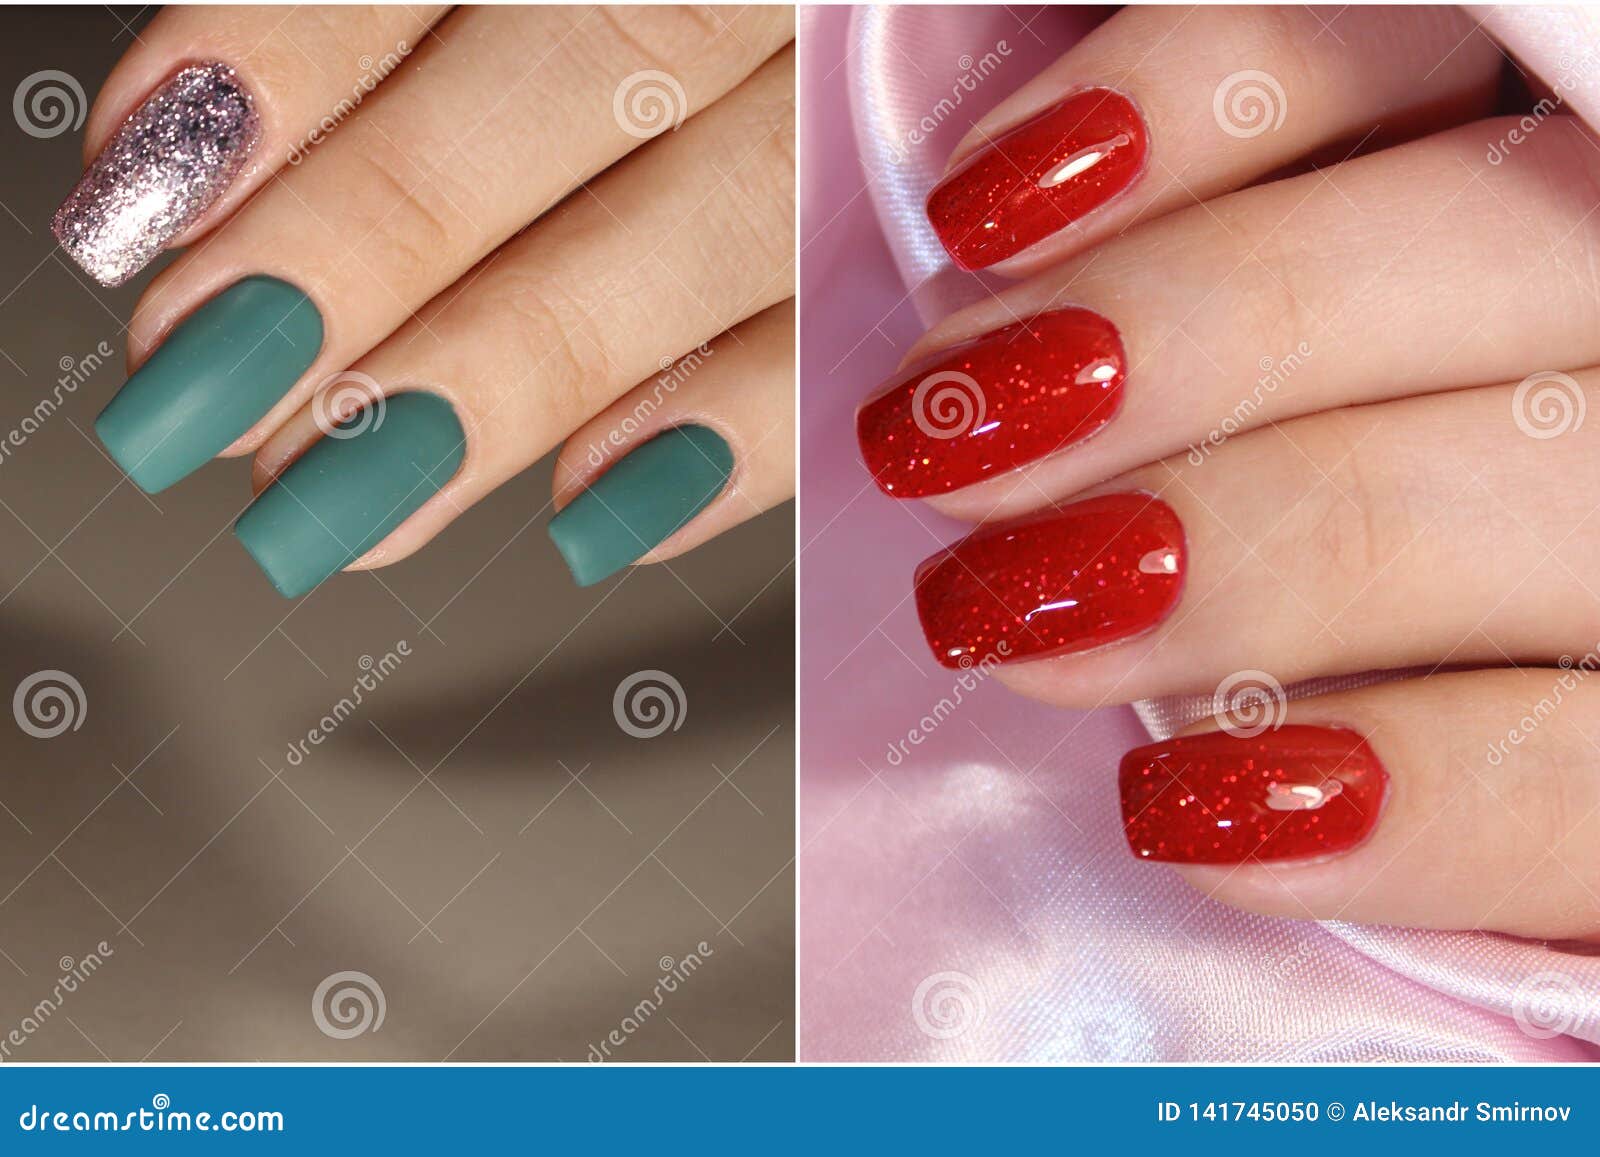 A Diverse Range Of Nail Designcollage By Nail Art Stock Photo